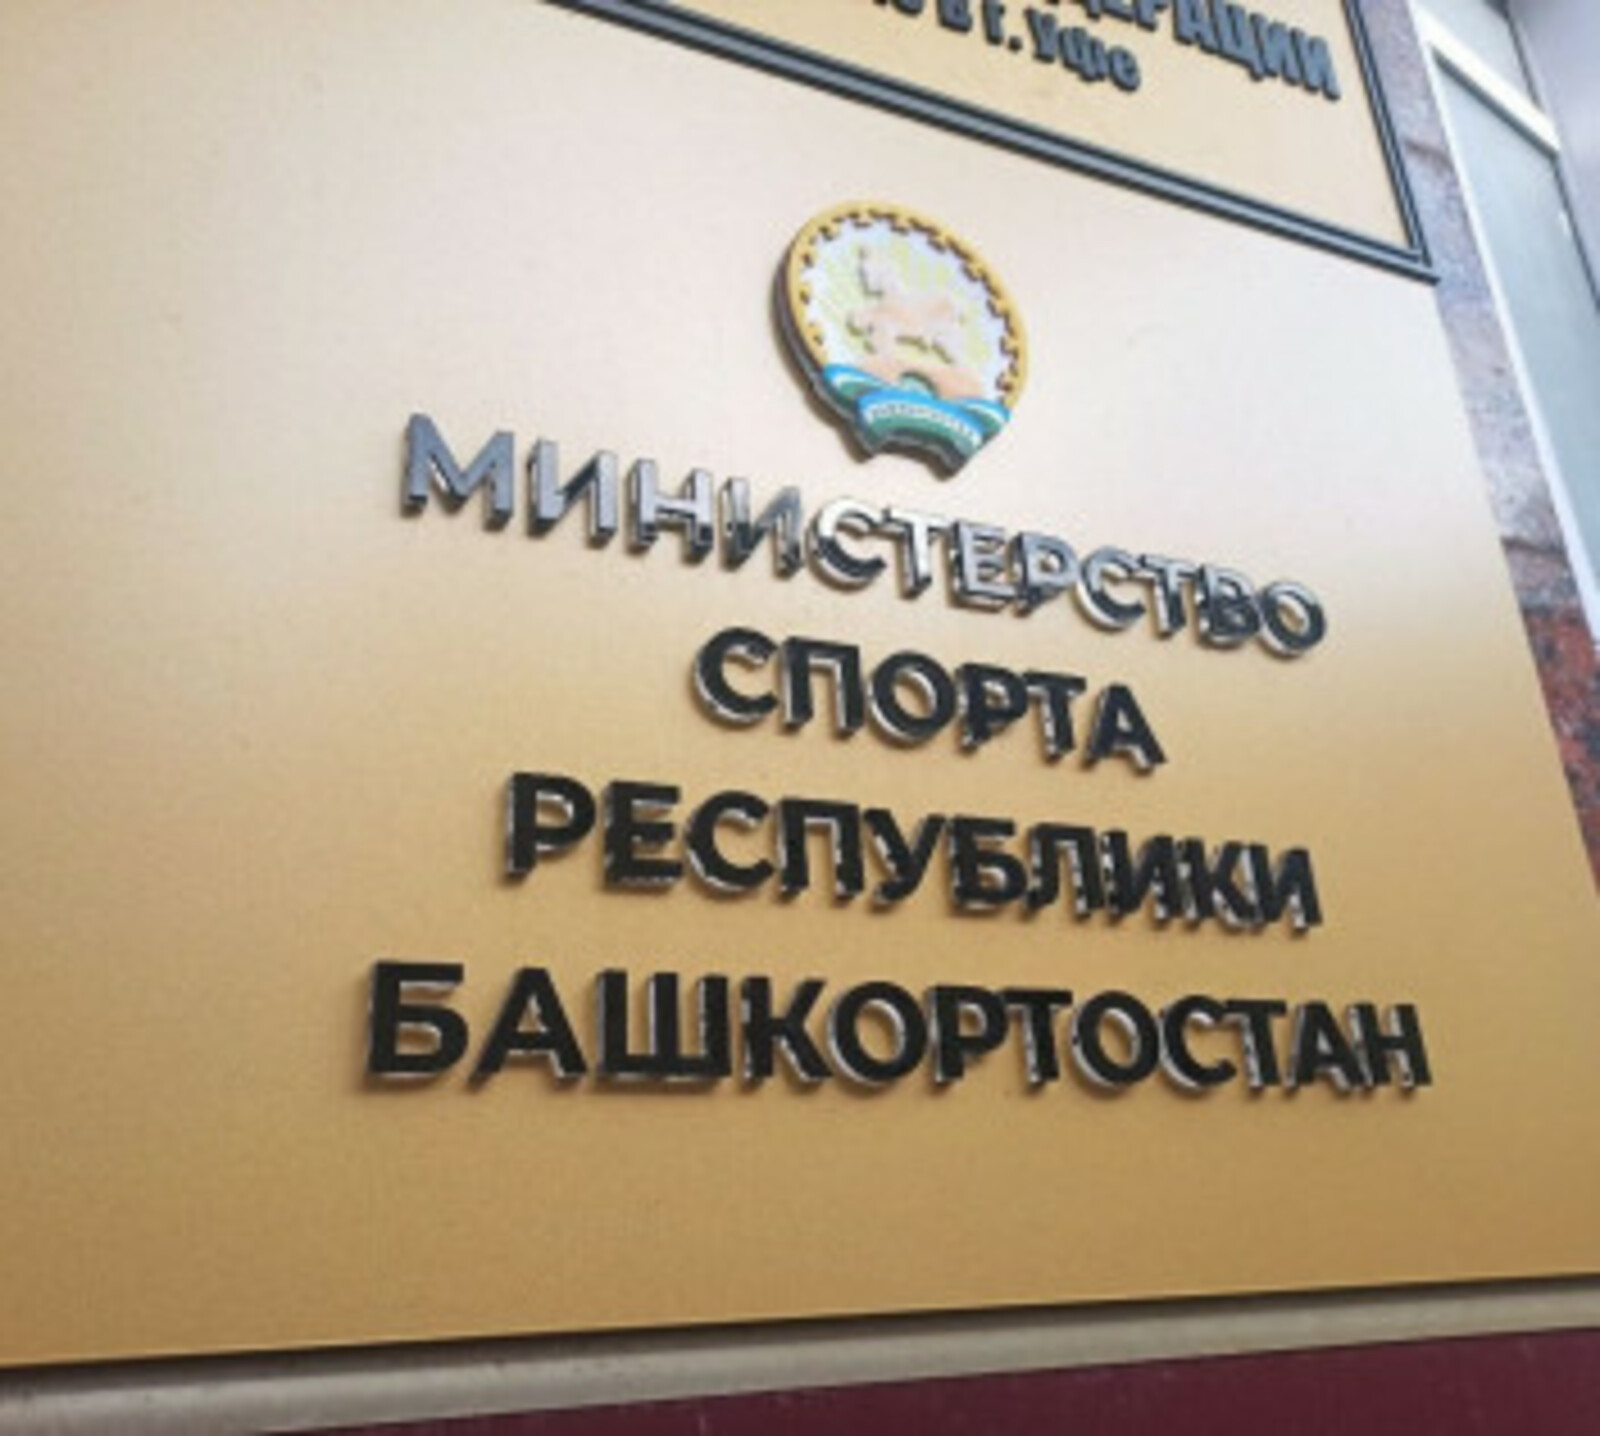 Сайт минспорта башкортостана